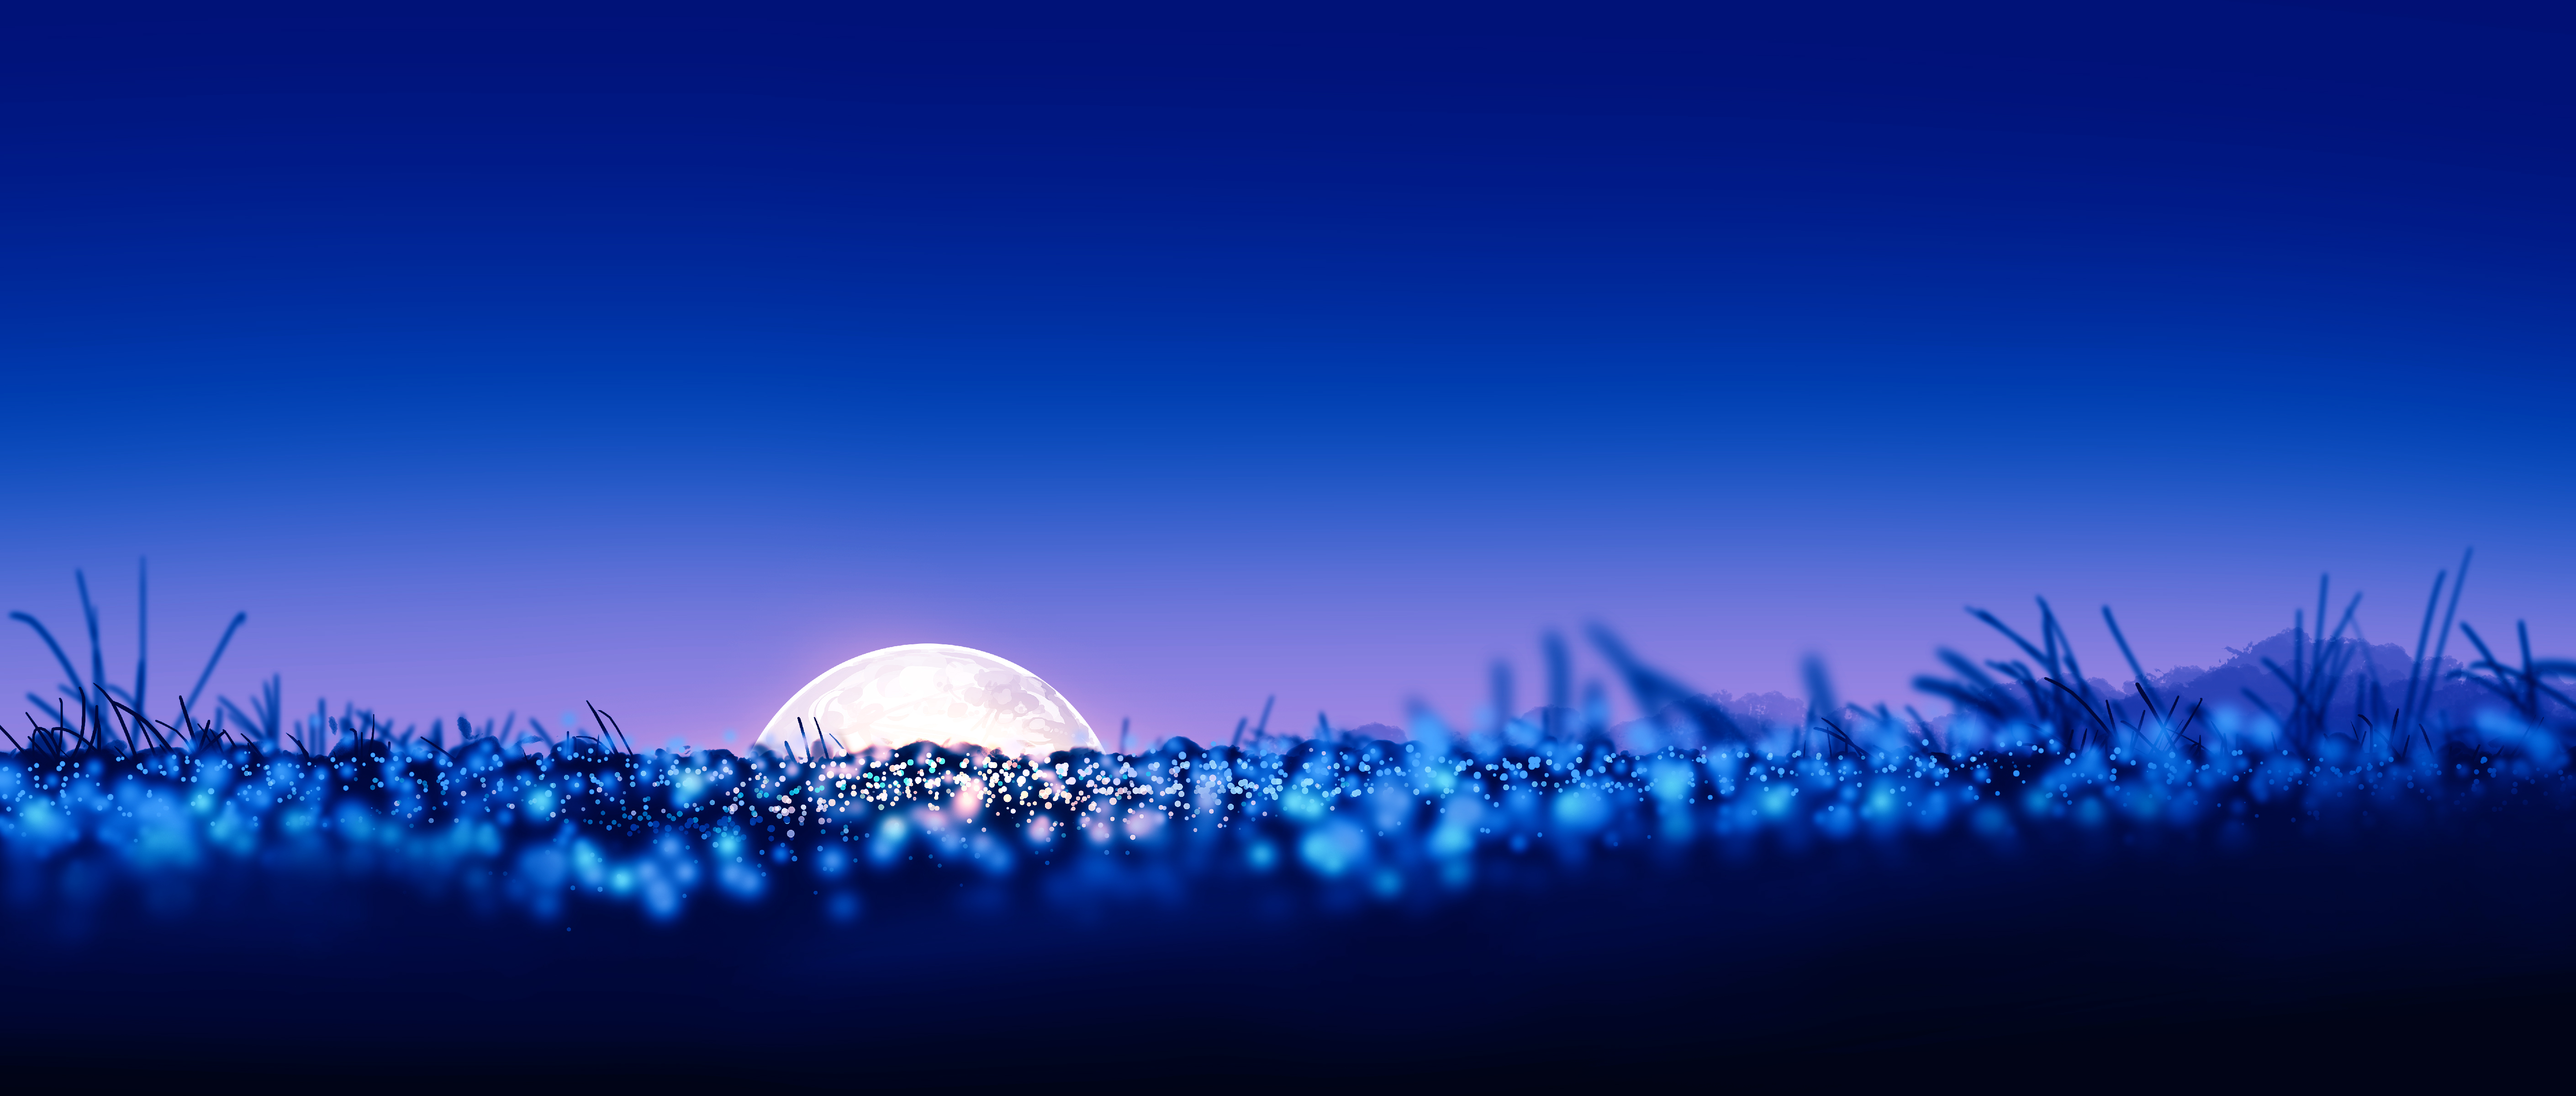 Gracile Digital Art Artwork Illustration Japan Landscape Night Nightscape Purple Wide Screen Ultrawi 5640x2400